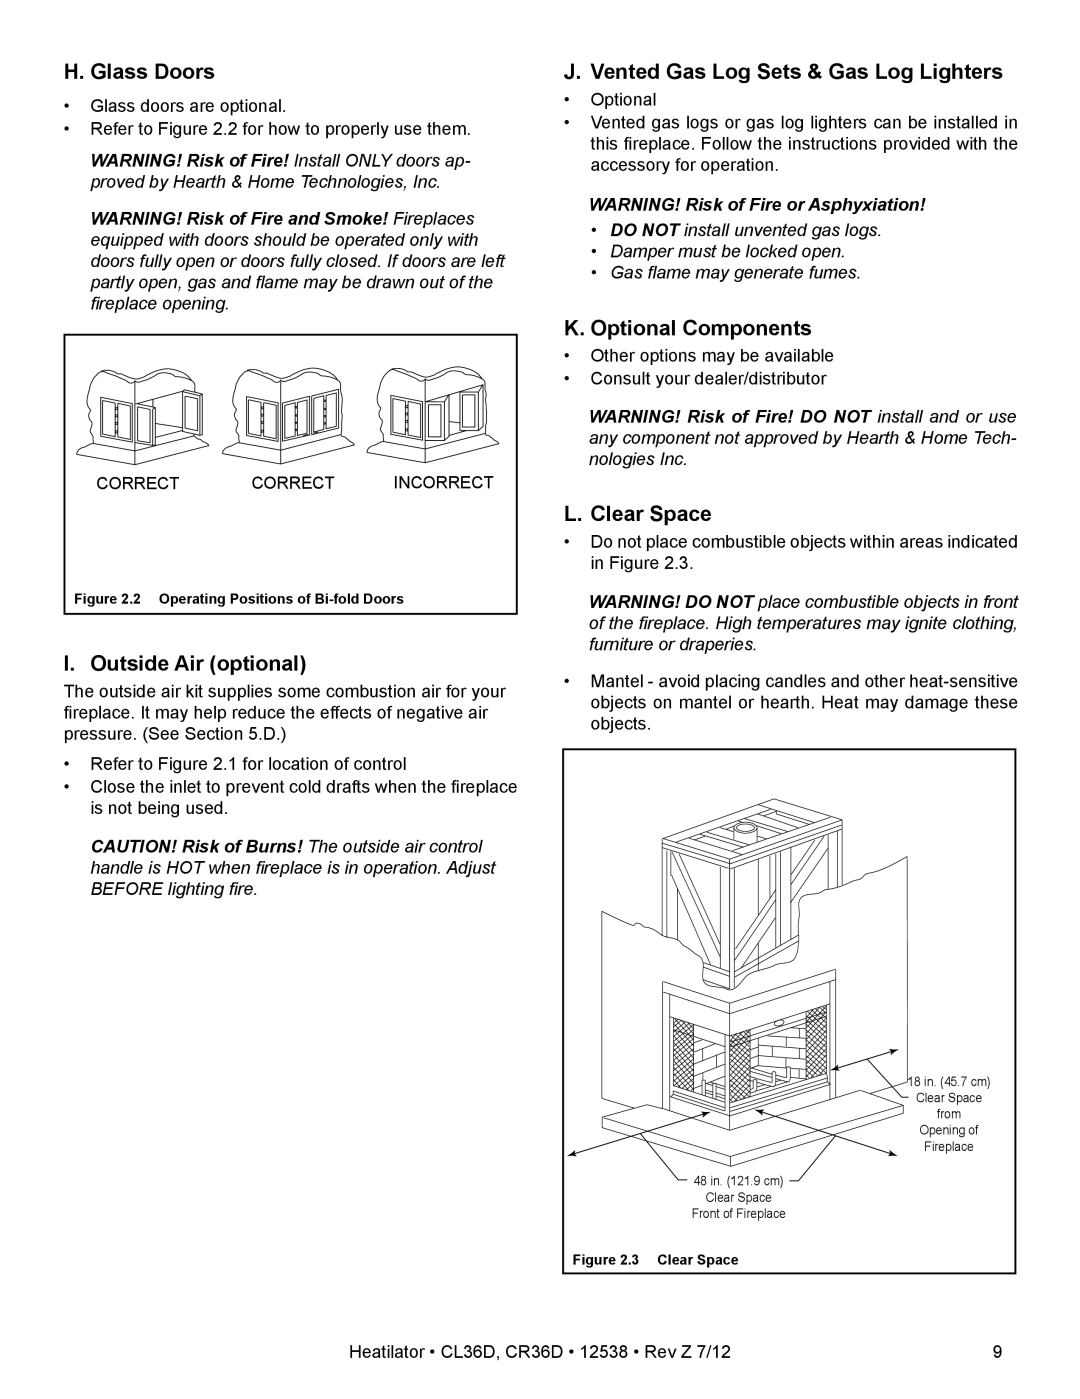 Heatiator CL36D H. Glass Doors, I. Outside Air optional, J. Vented Gas Log Sets & Gas Log Lighters, K. Optional Components 